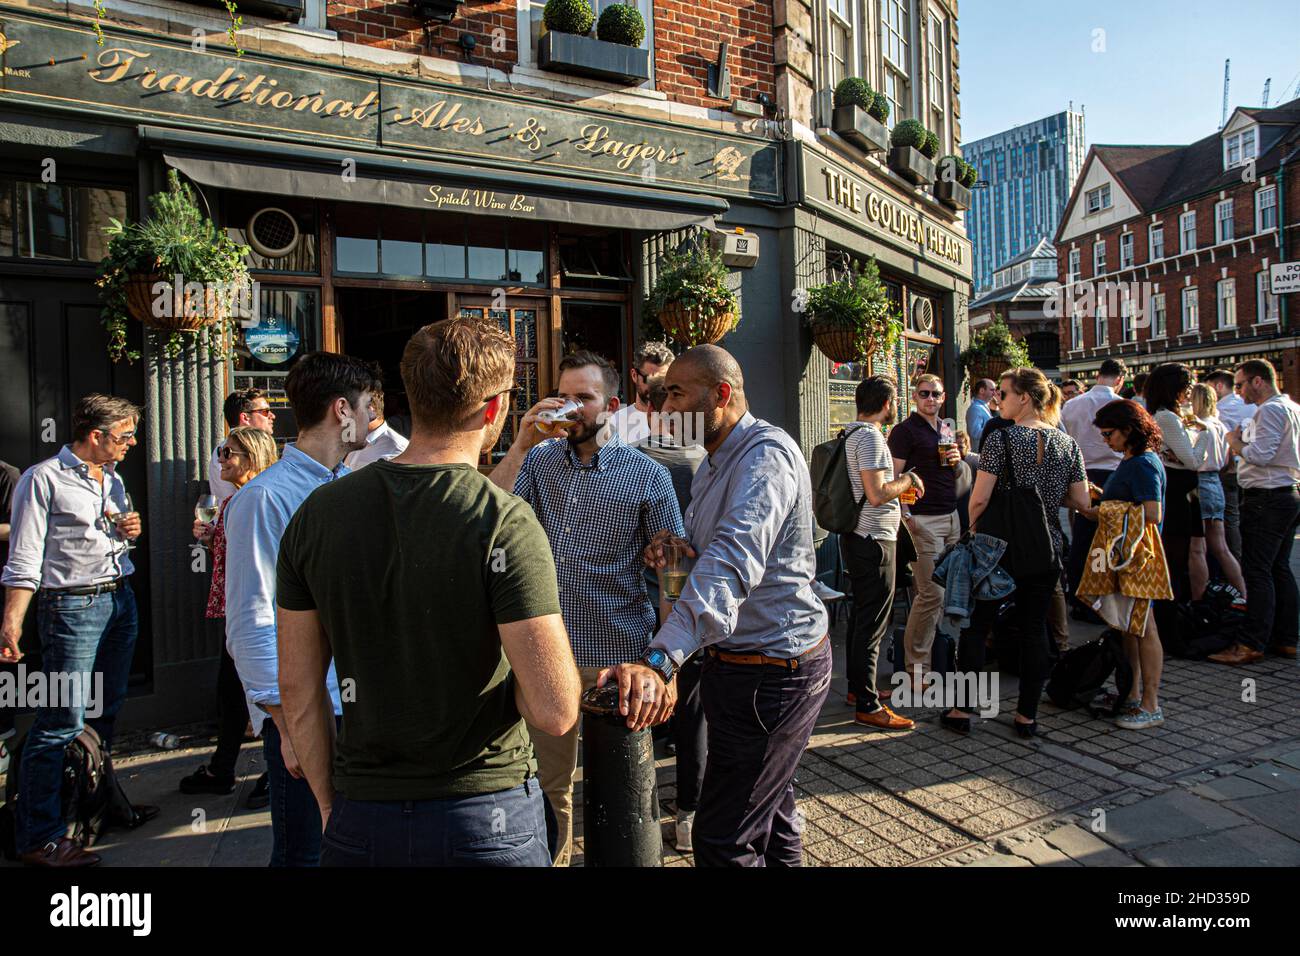 Peopel drinking after work outside The Golden Heart Pub on Commercial Street in Spitalfields, London Stock Photo